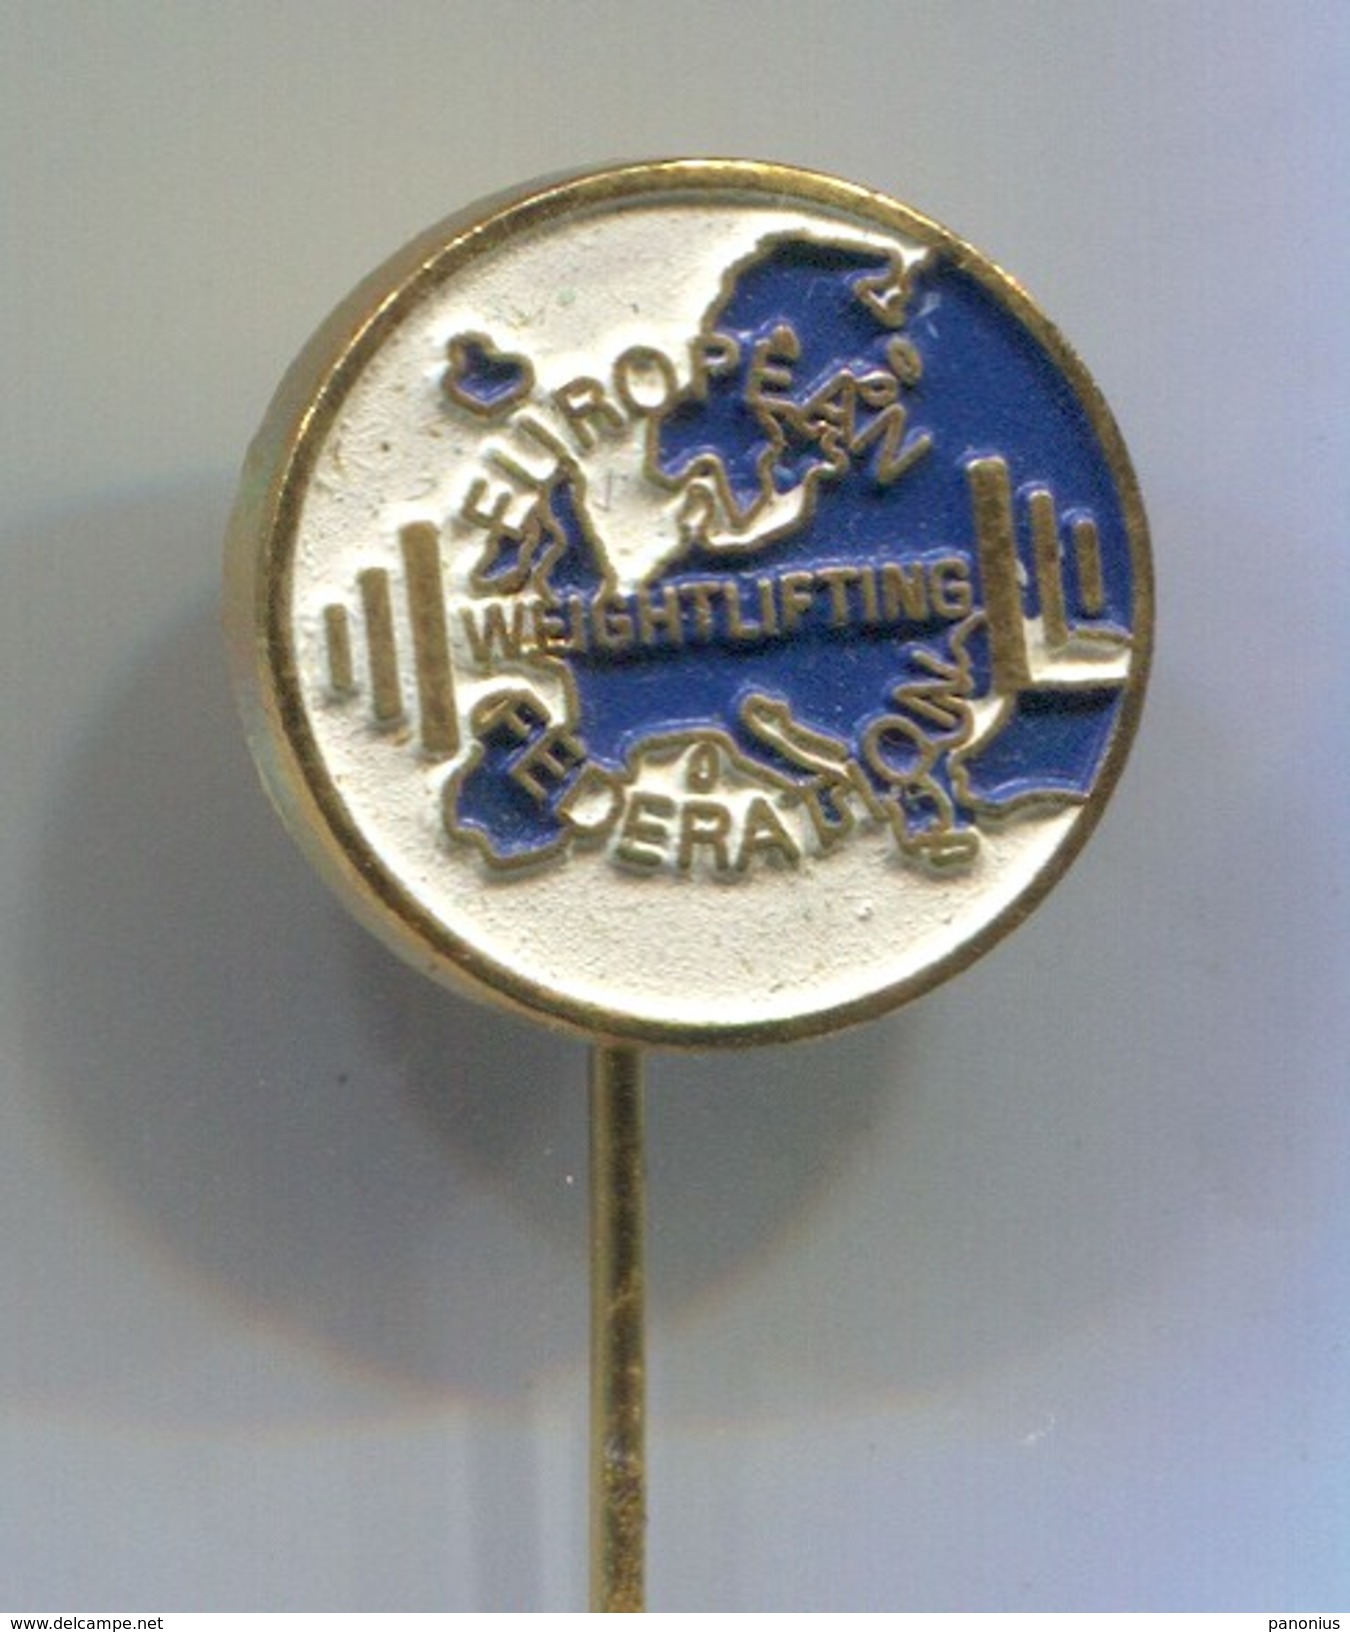 Weightlifting - EUROPEAN FEDERATION, Vintage Pin Badge, Abzeichen - Pesistica